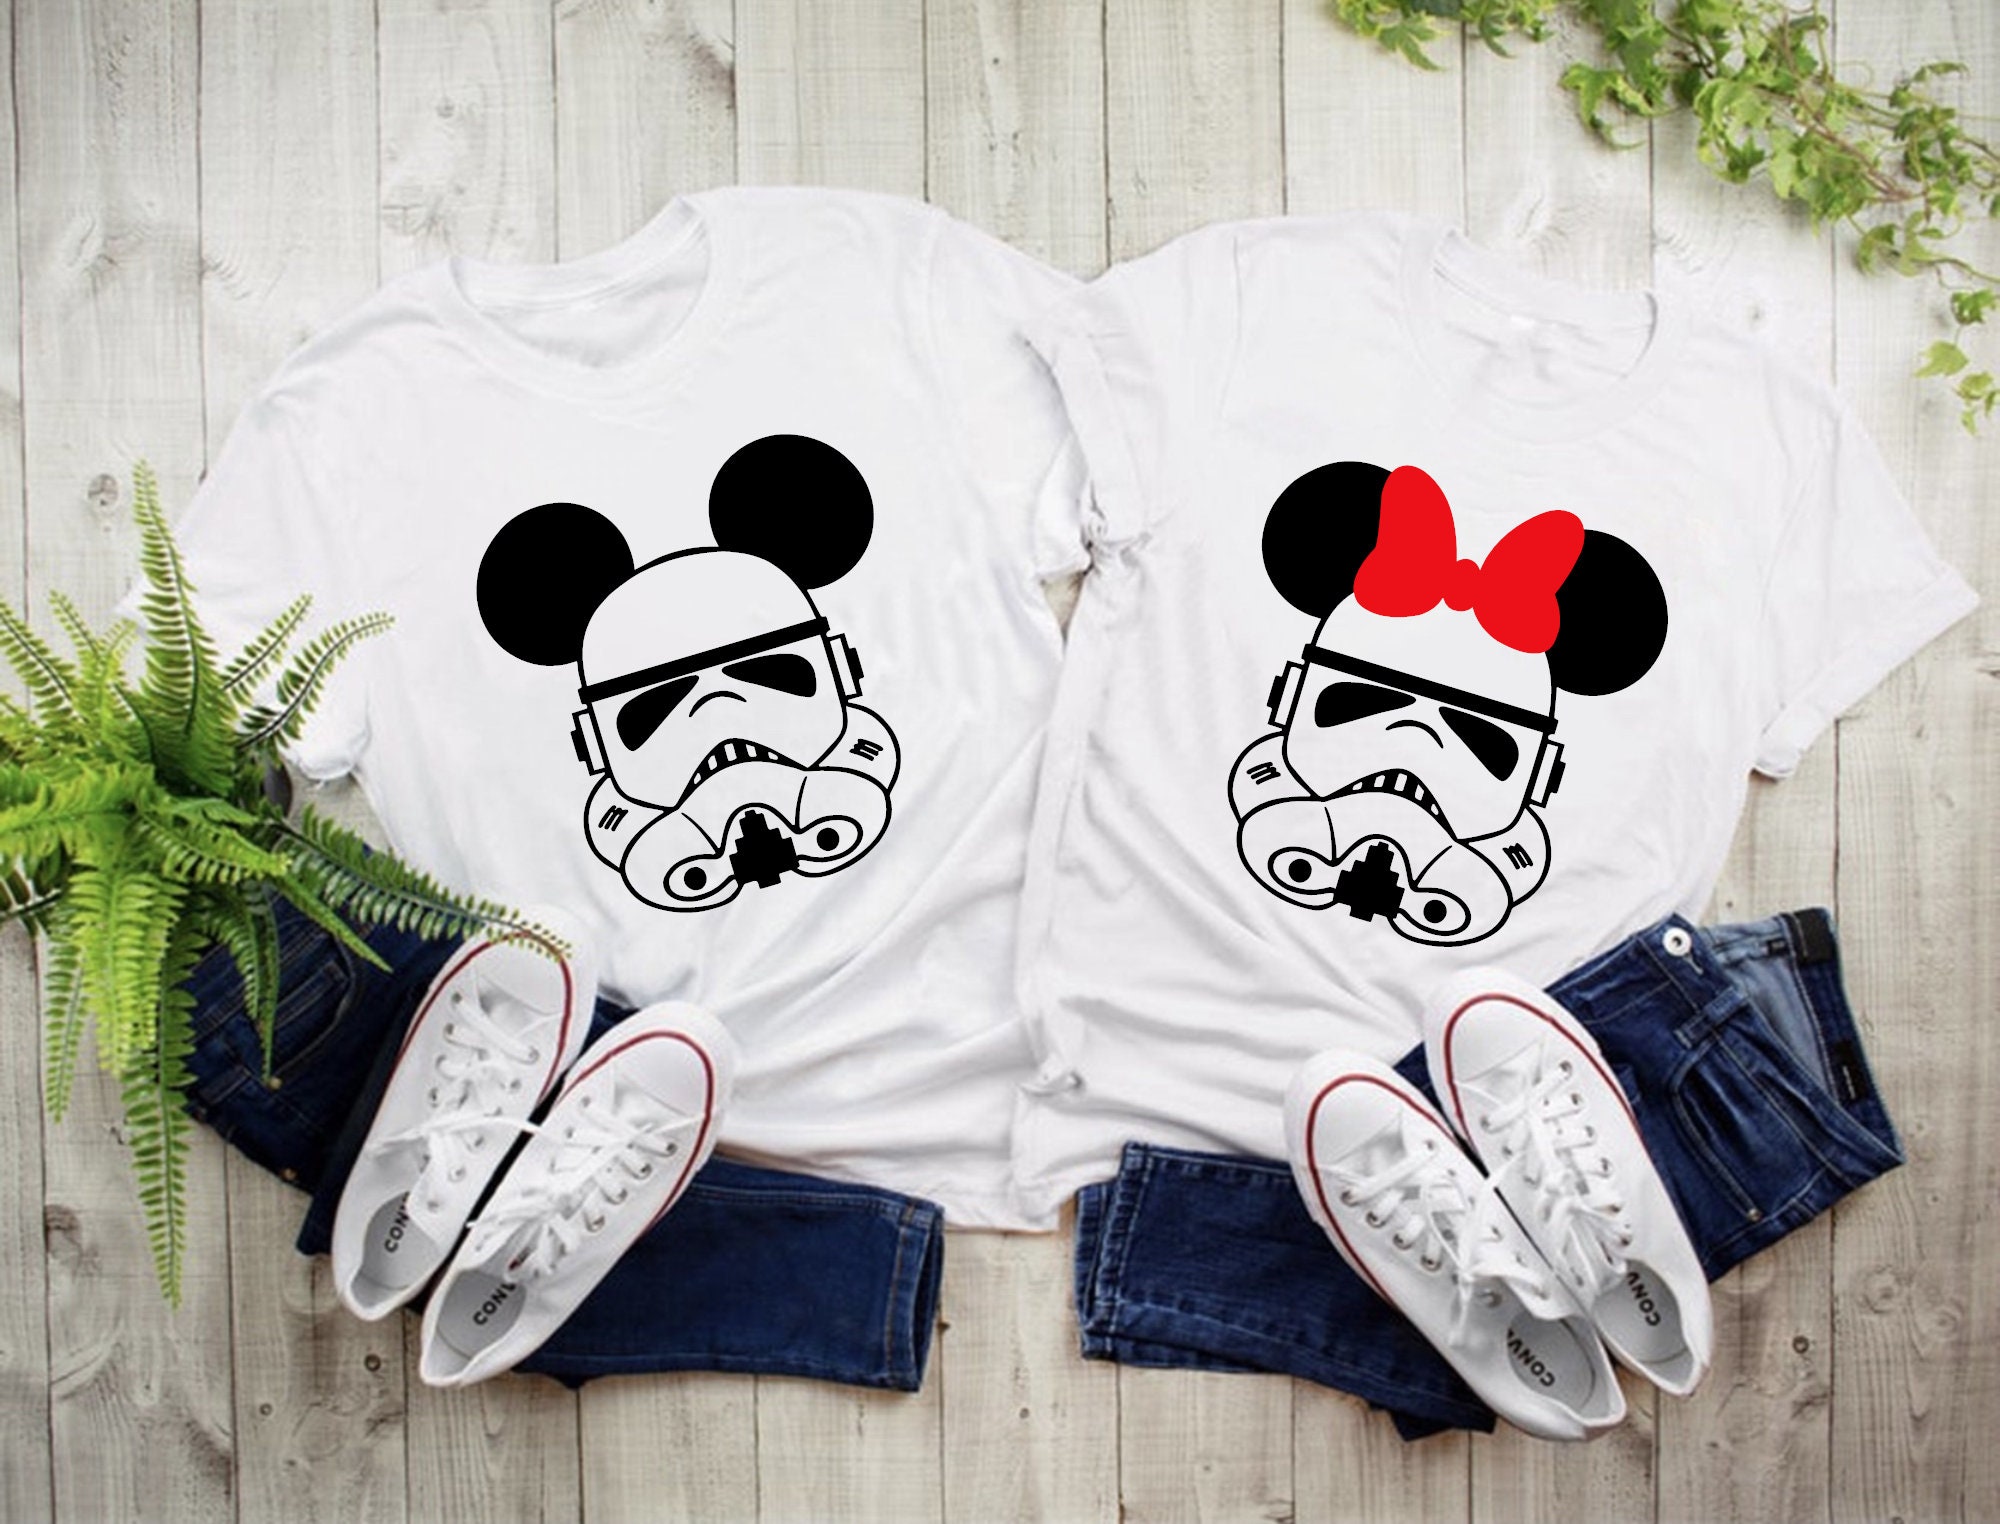 Star Wars Couples Gift | Disney Star Wars Couple Shirt | I Love You I Know Shirt | Disney Couple Shirt